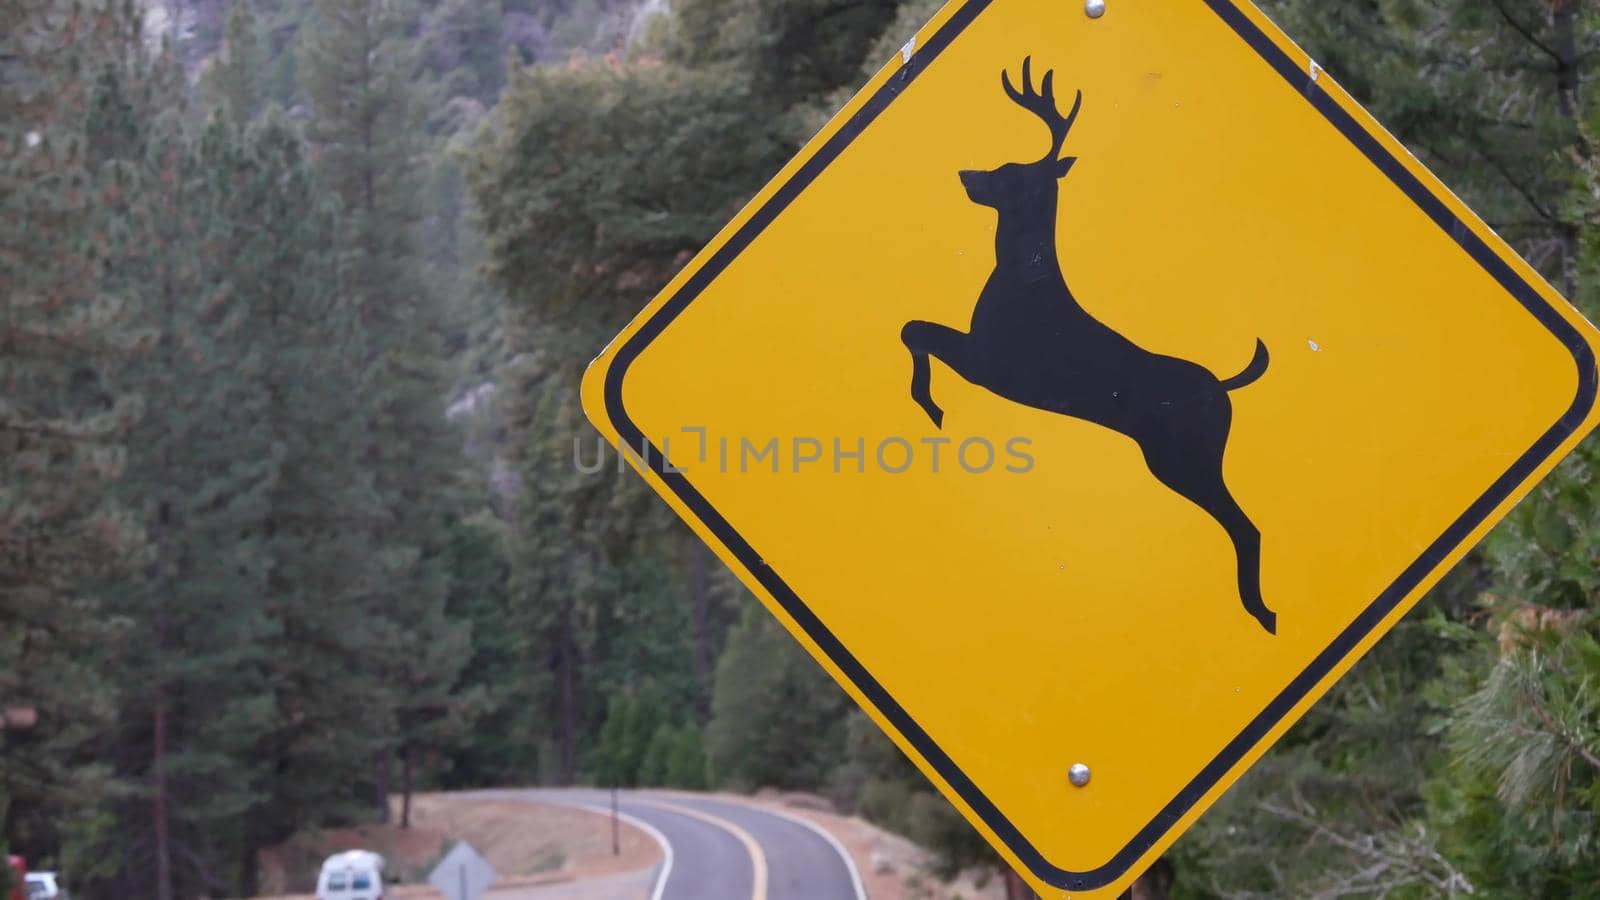 Deer crossing yellow road sign, California USA. Wild animal xing, traffic safety by DogoraSun